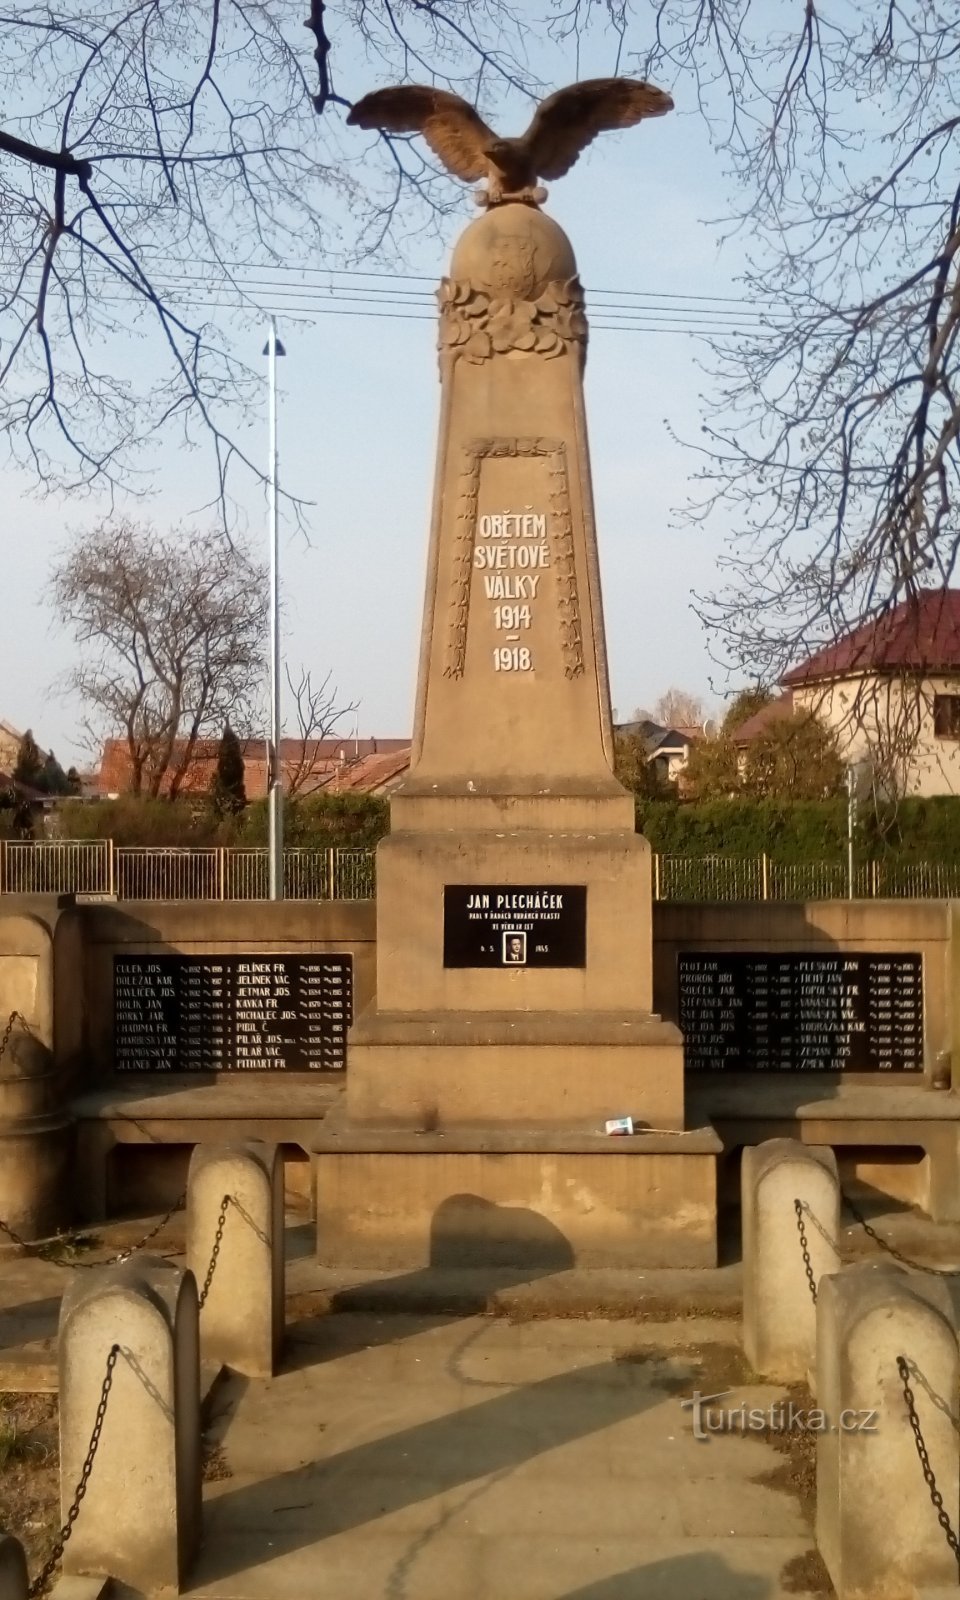 Monument to the fallen Tuněchody